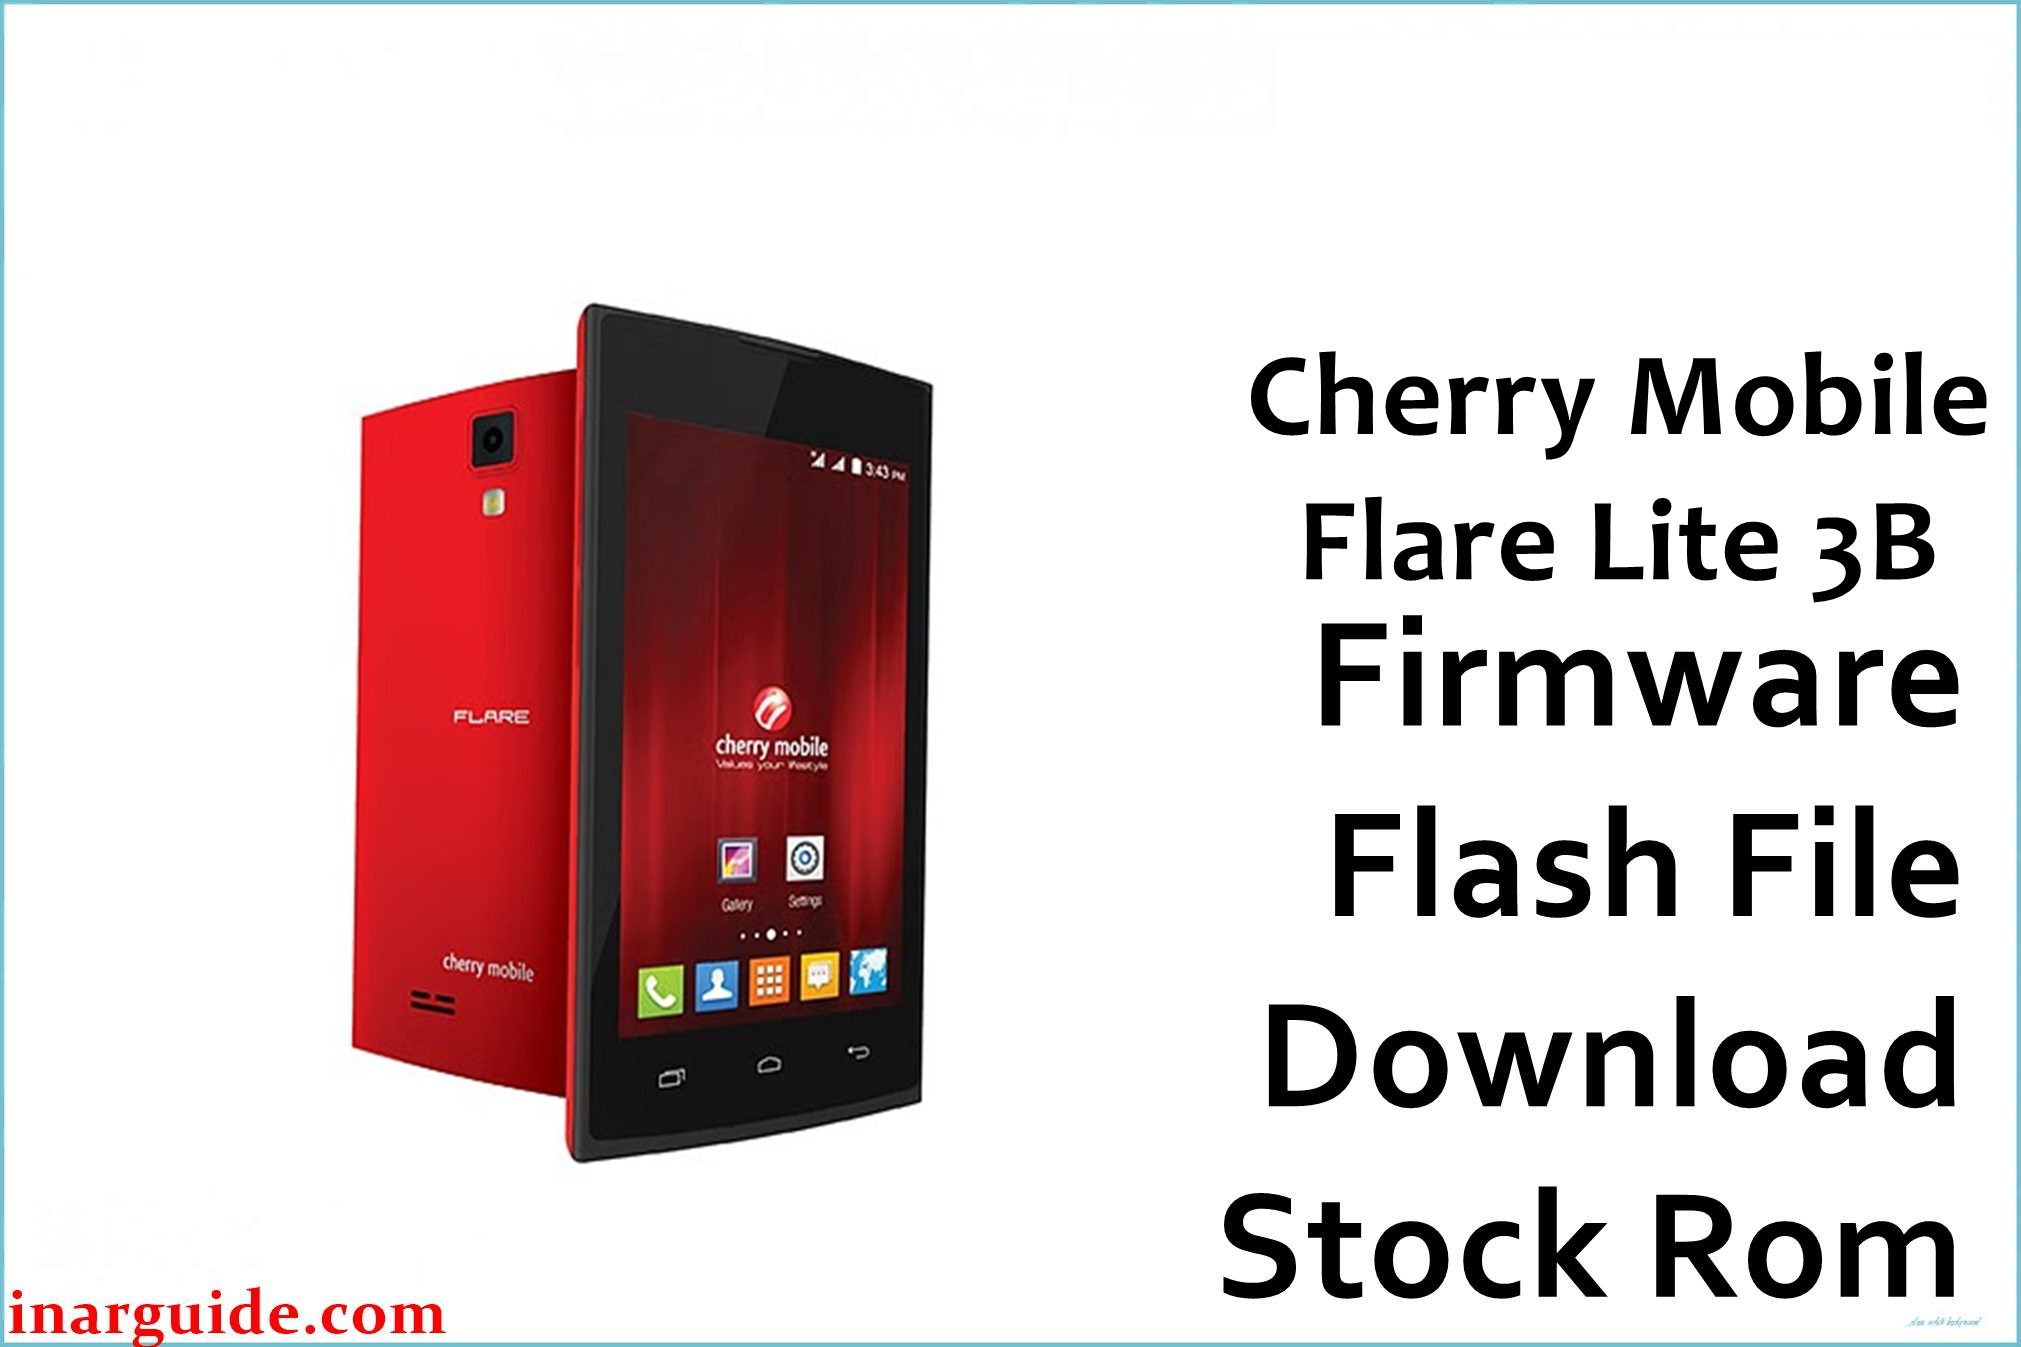 Cherry Mobile Flare Lite 3B